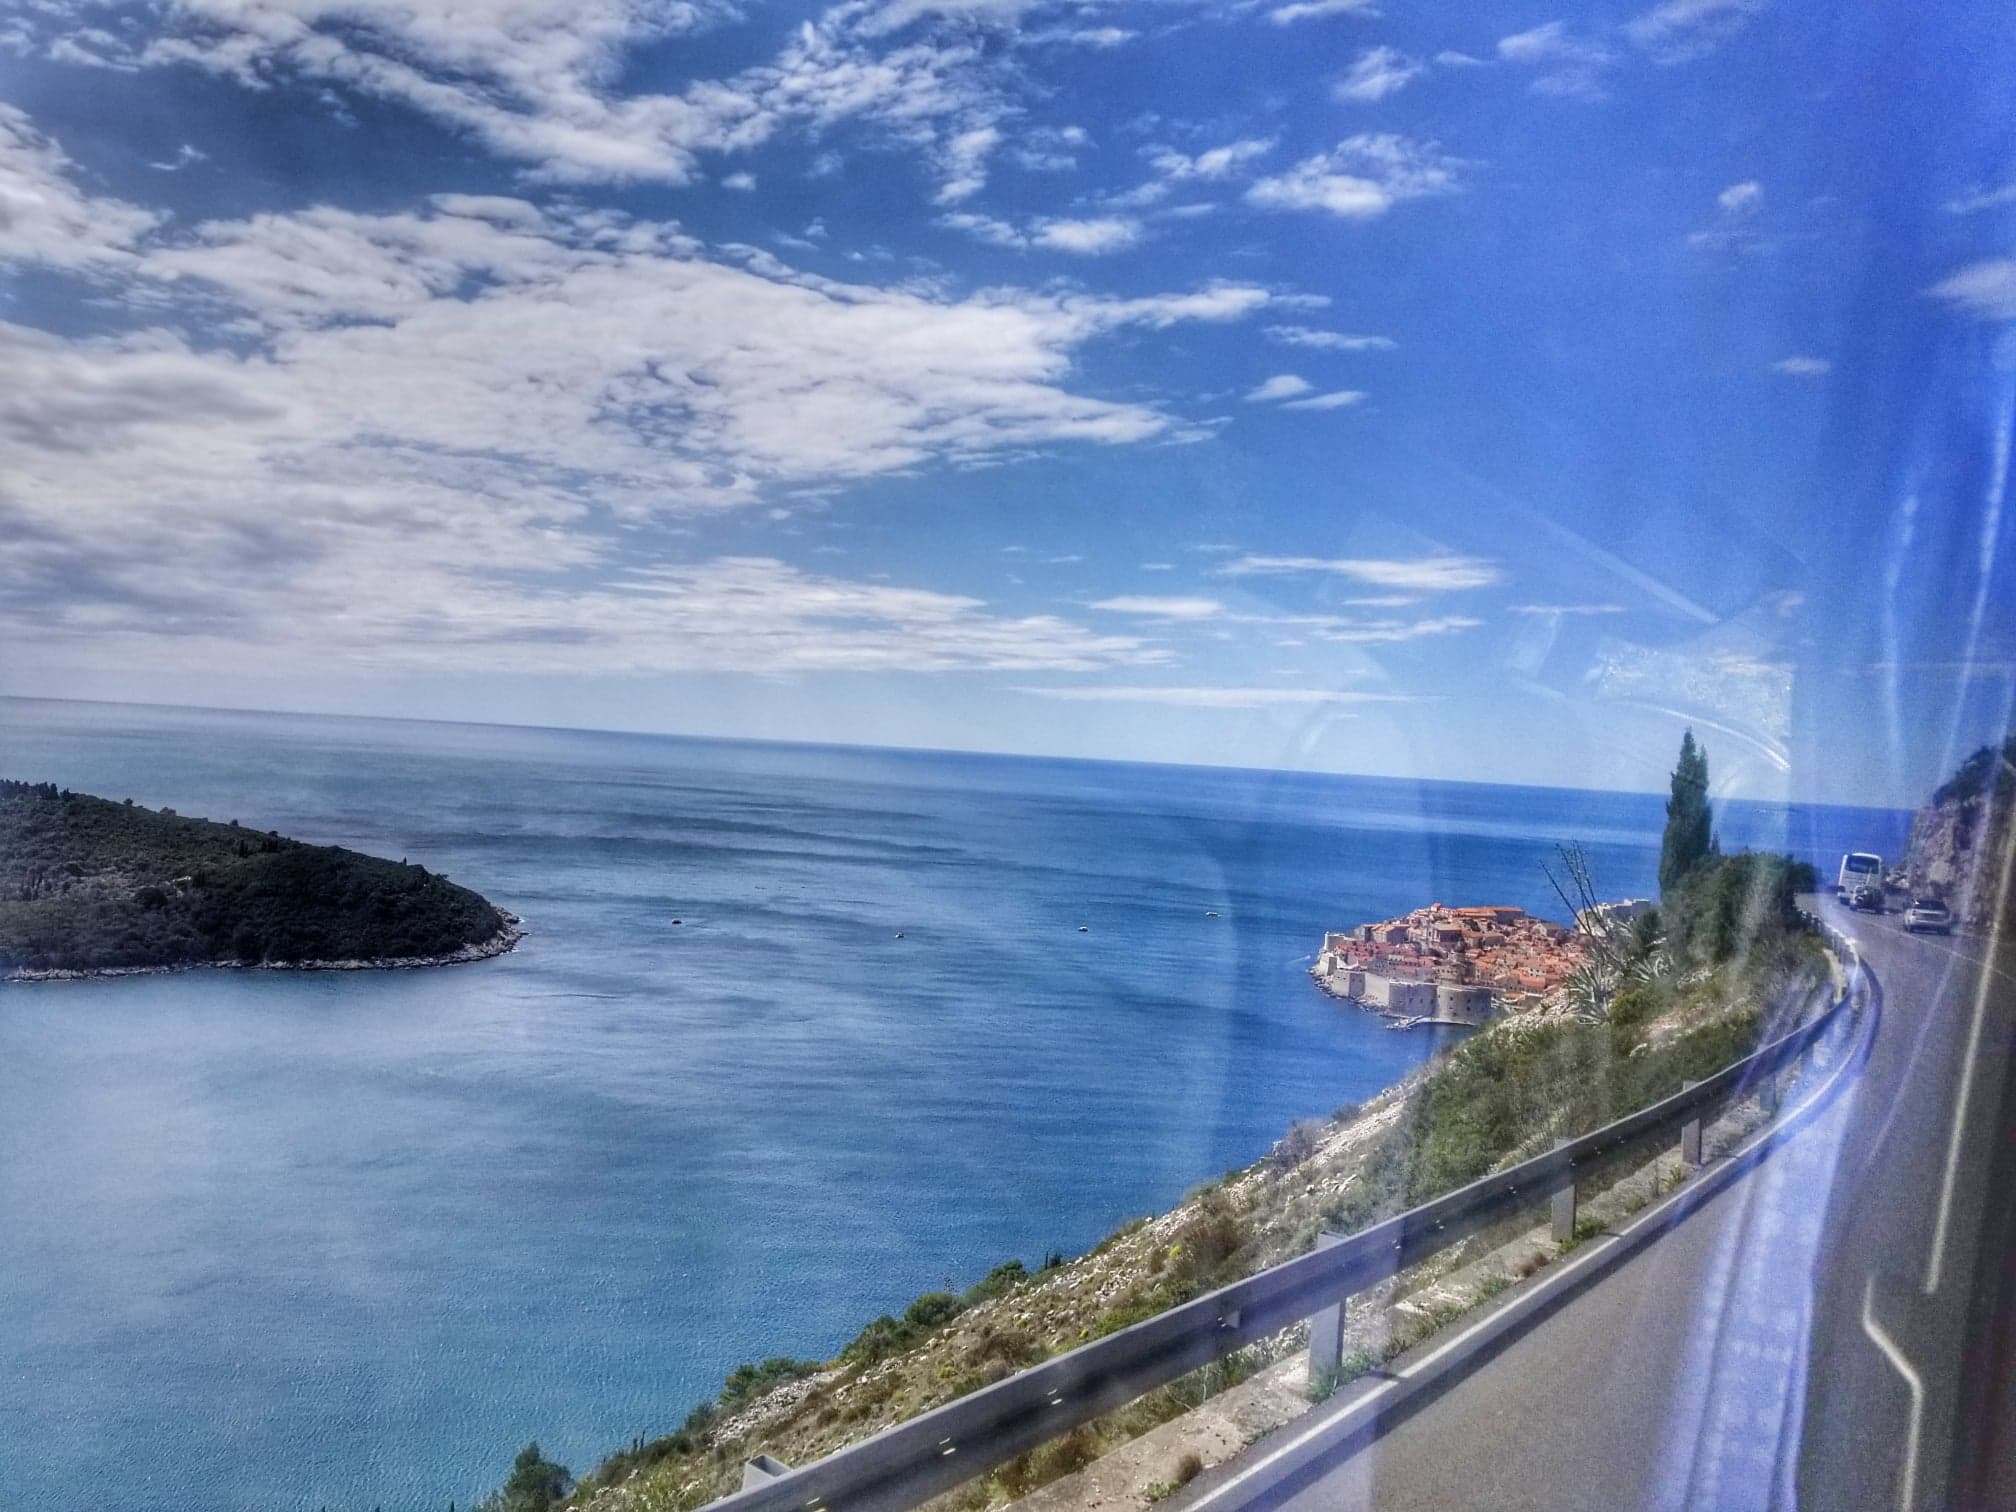 Bus ride to Dubrovnik